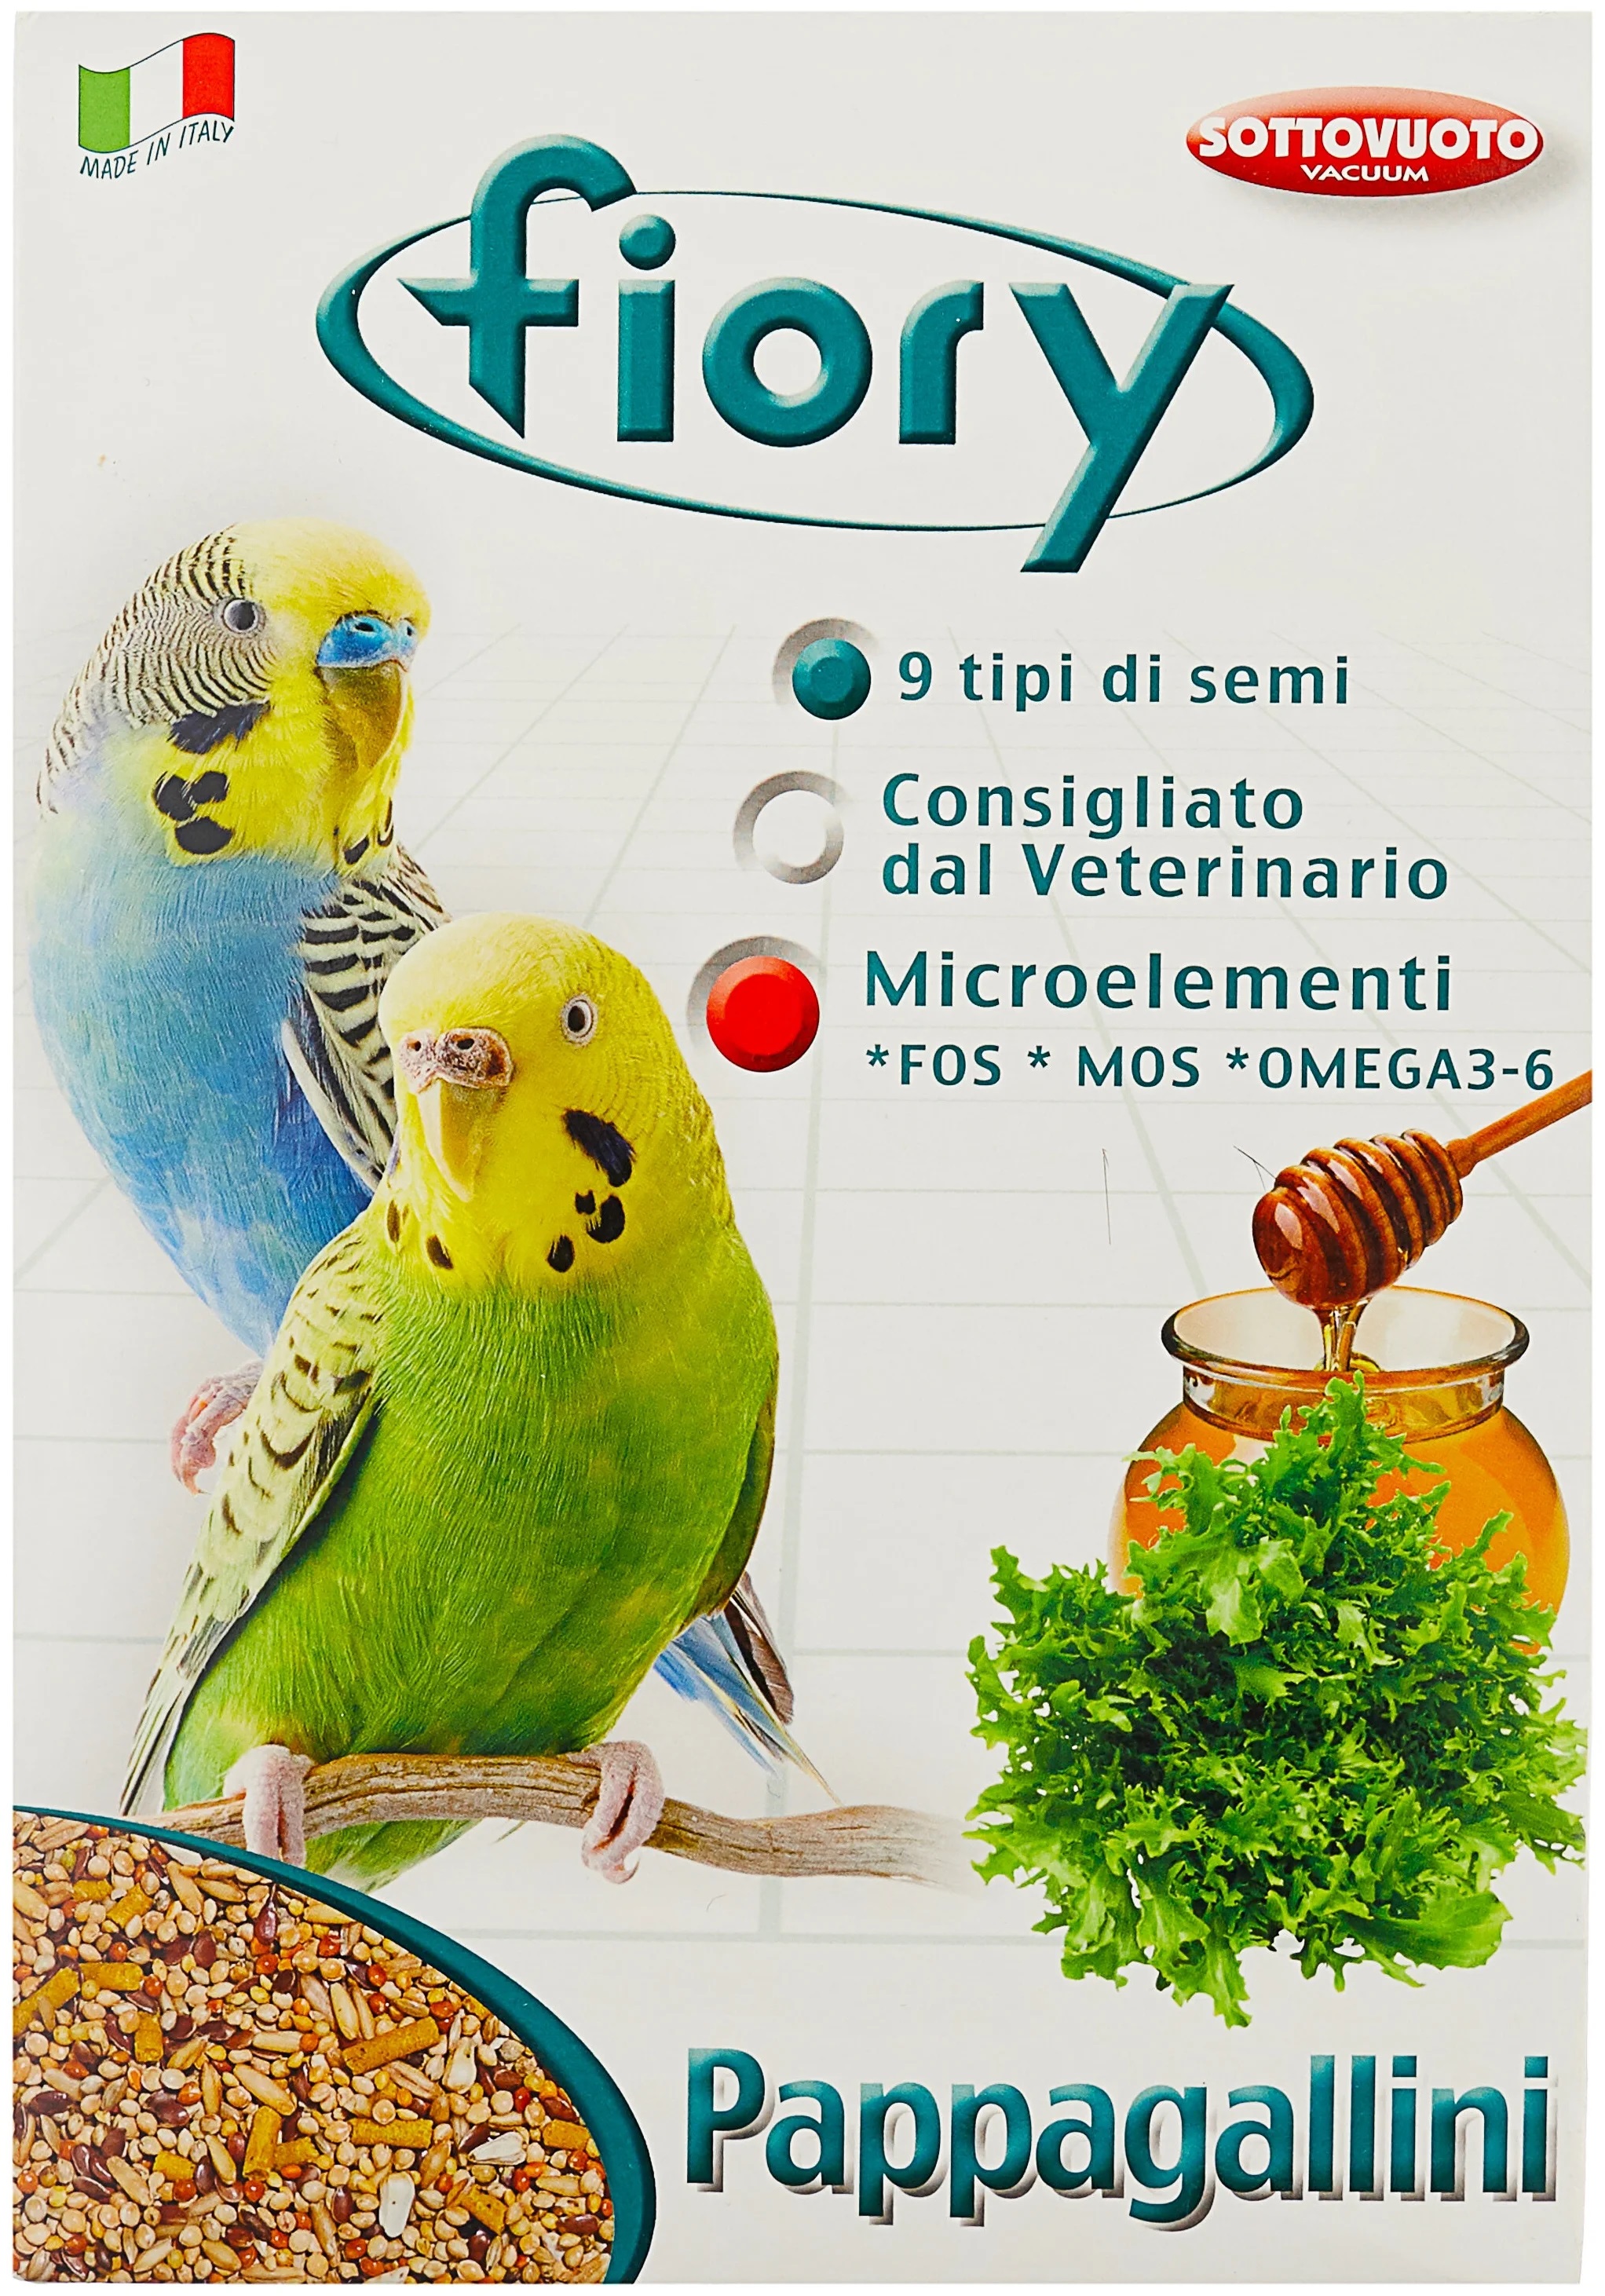 Корм для волнистых попугаев Fiory 1 кг pappagallini